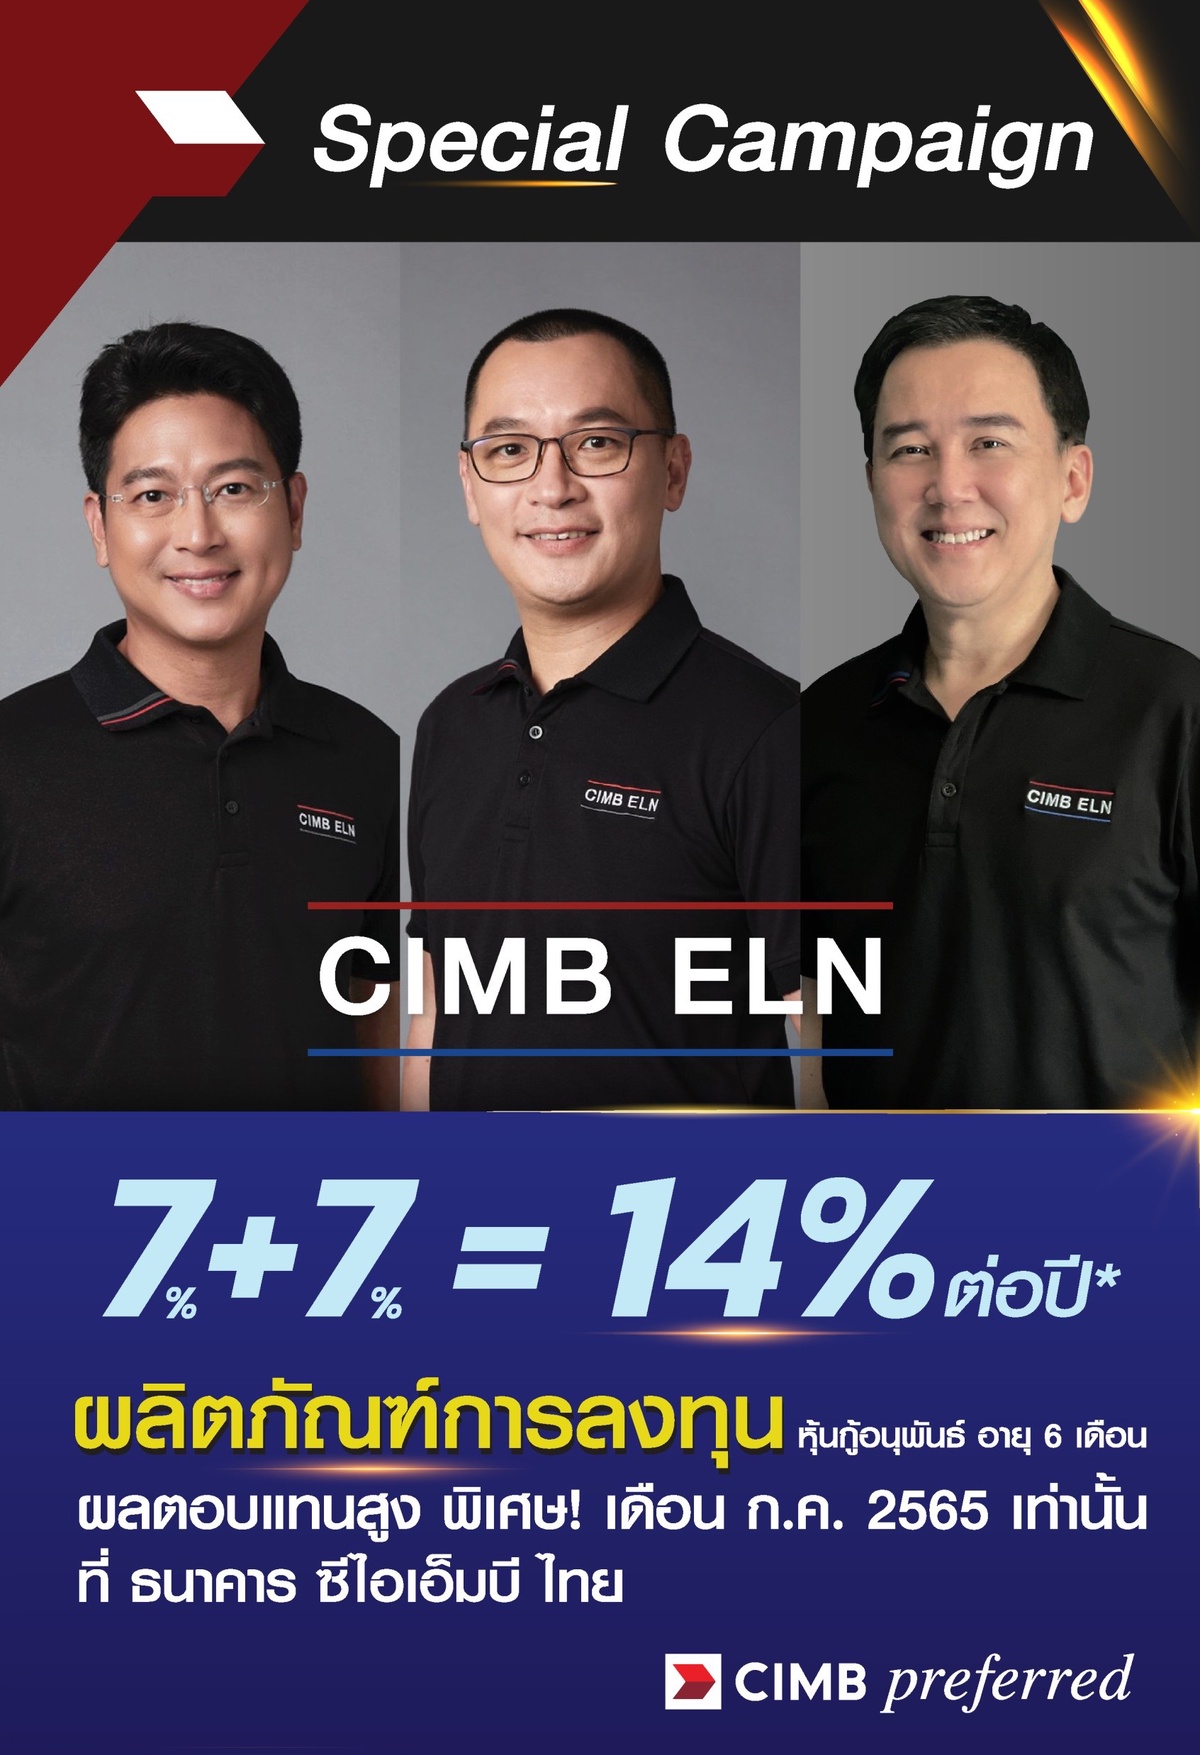 CIMB Thai ส่ง campaign ผลตอบแทนพิเศษ 7-14% กับ Equity Linked Noted เครื่องมือการลงทุนสู้เงินเฟ้อ